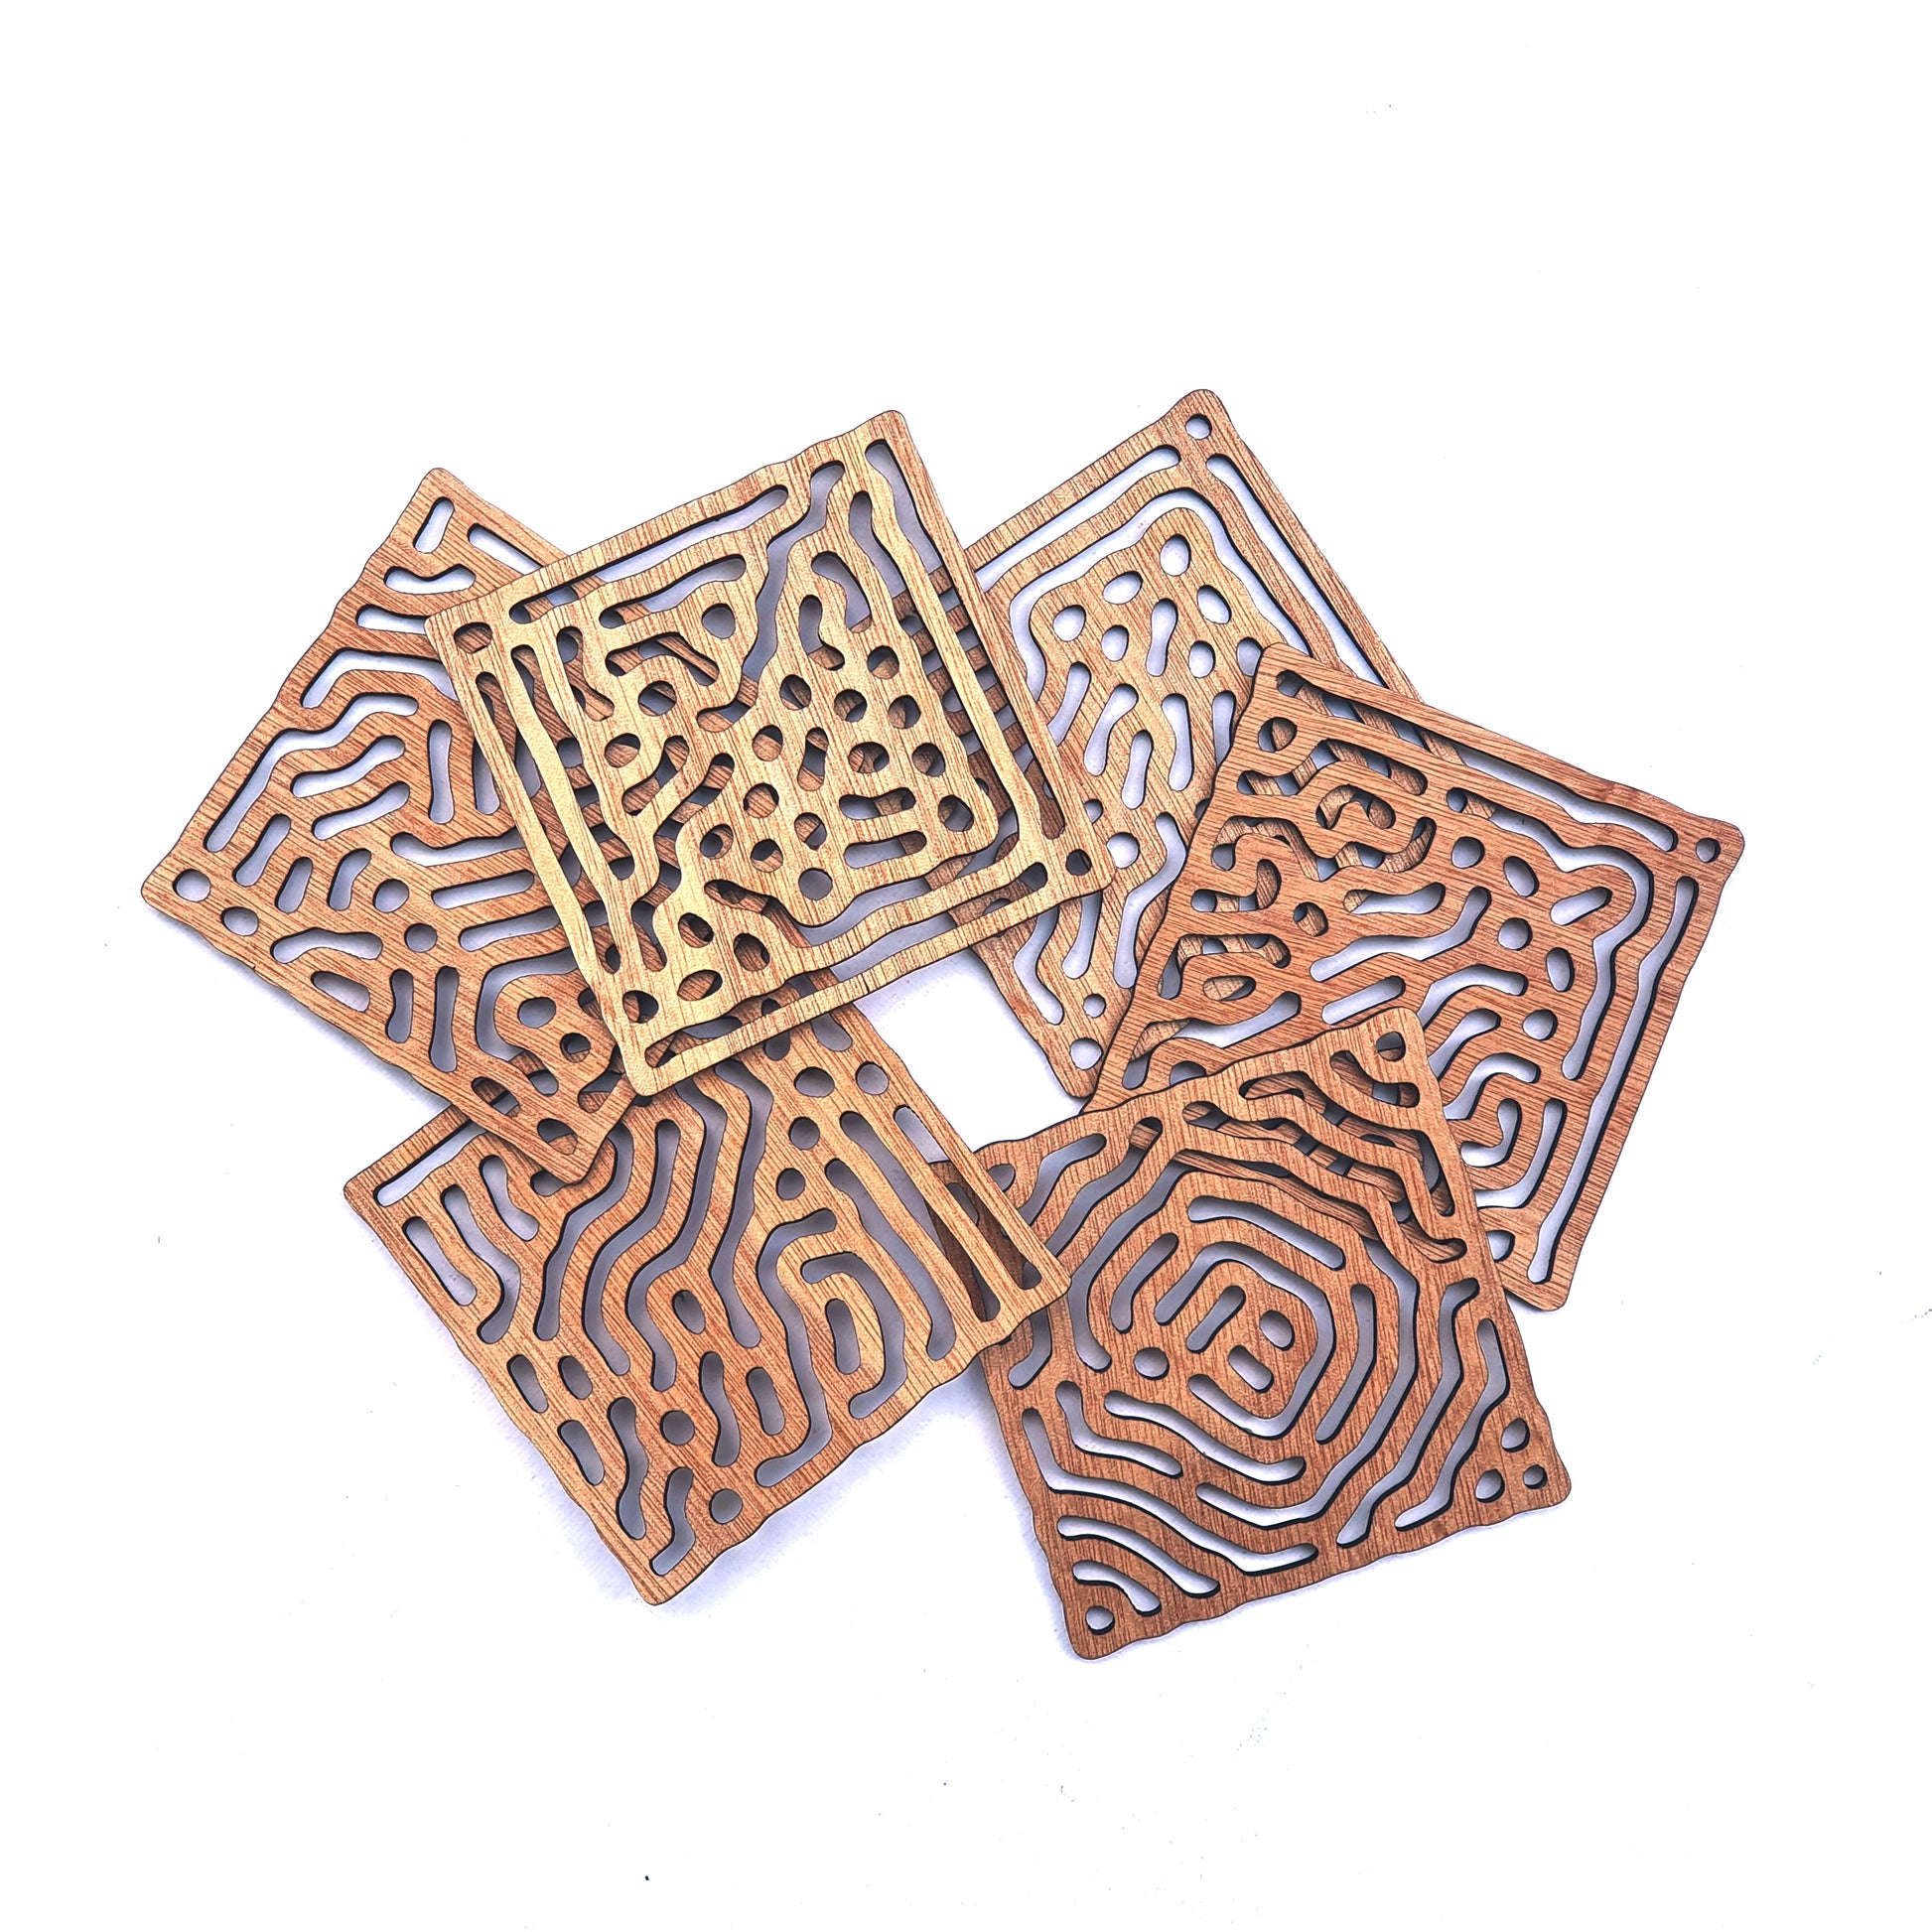 Vierkante Entropy glasonderzetters - 6 stuks - kaboomlaser